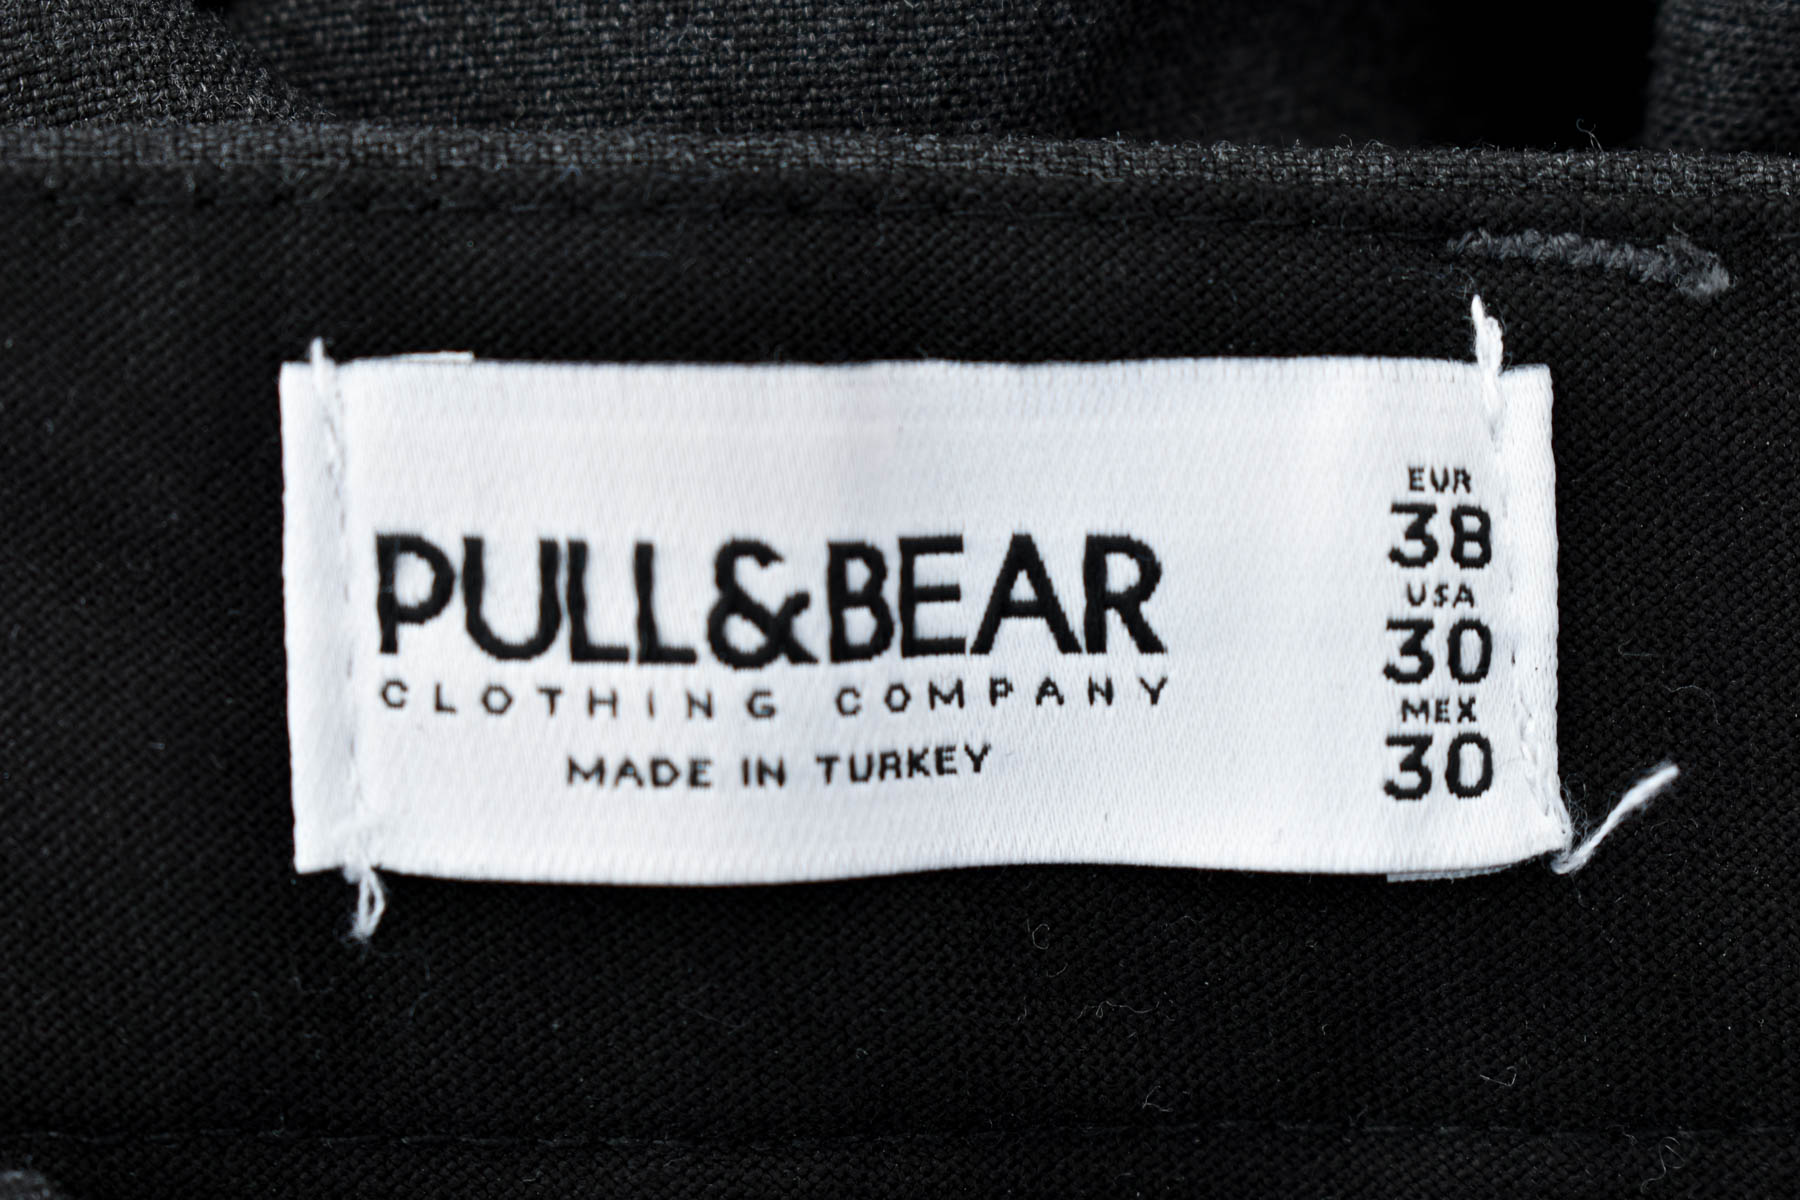 Men's trousers - Pull & Bear - 2